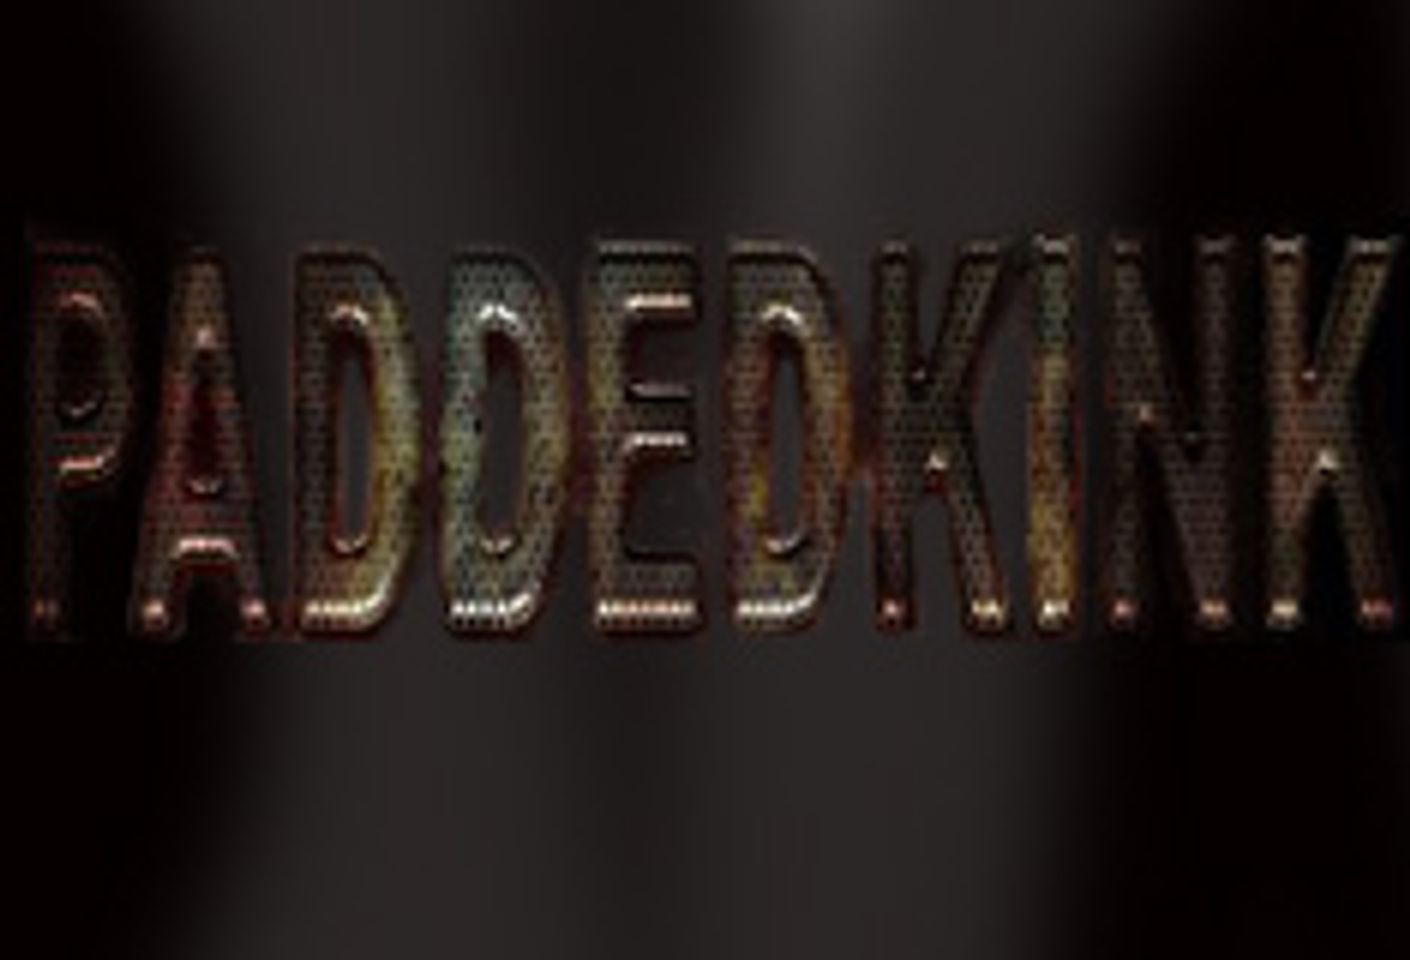 Spicecash Launches BBW BDSM site, PaddedKink.com